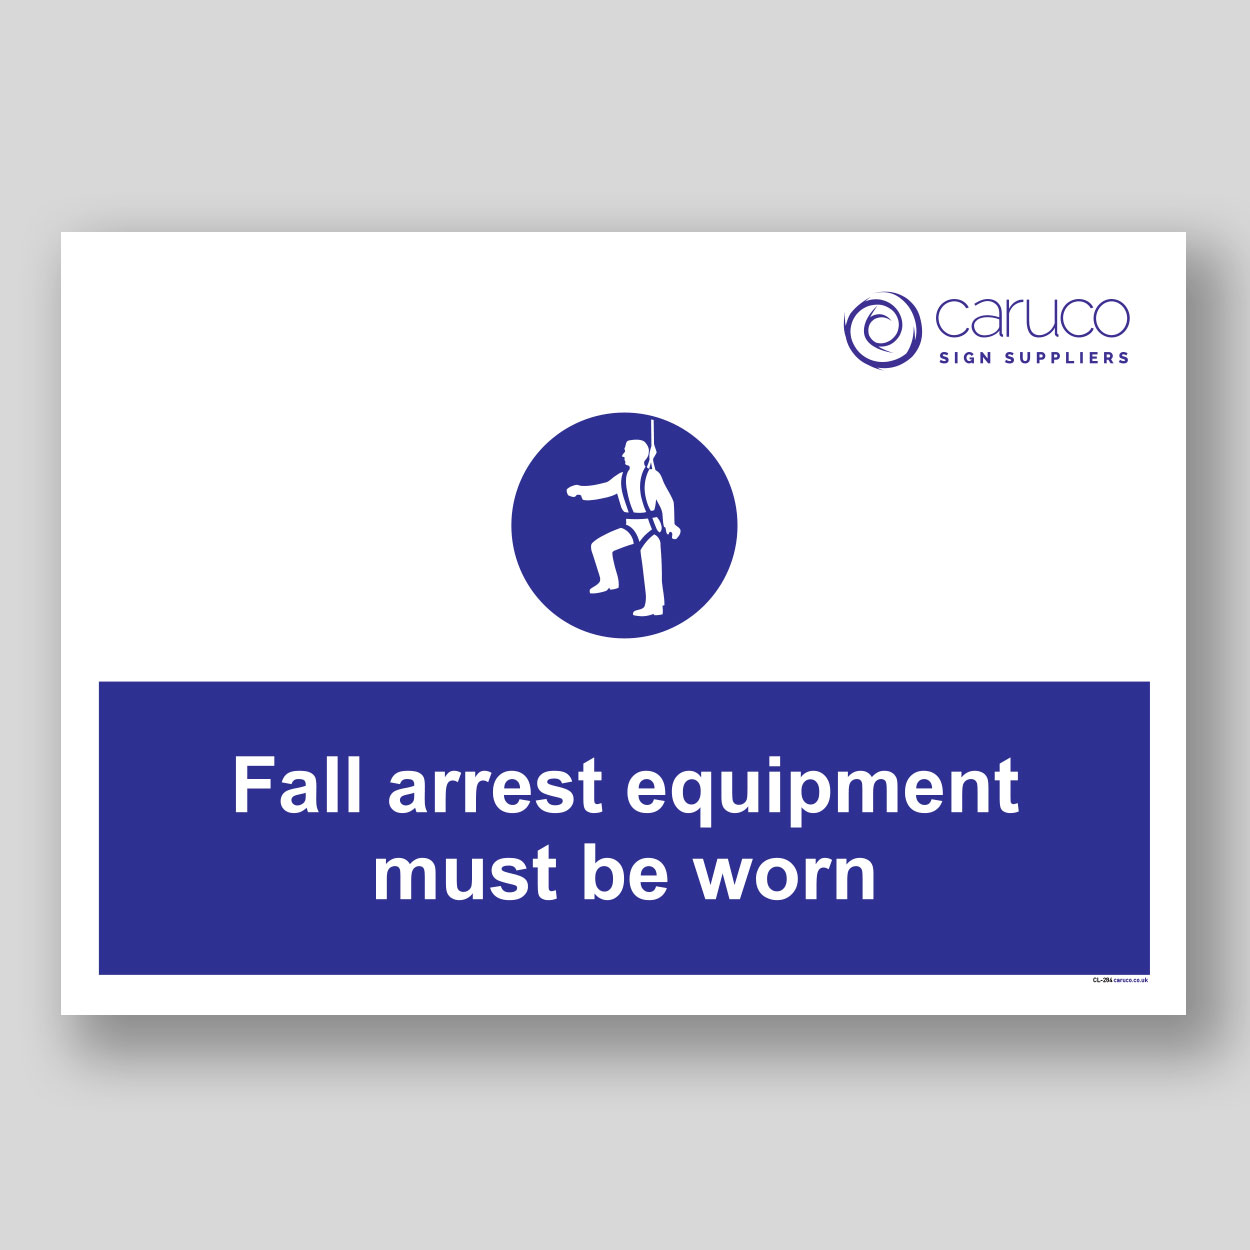 CL-284 Fall arrest equipment must be worn